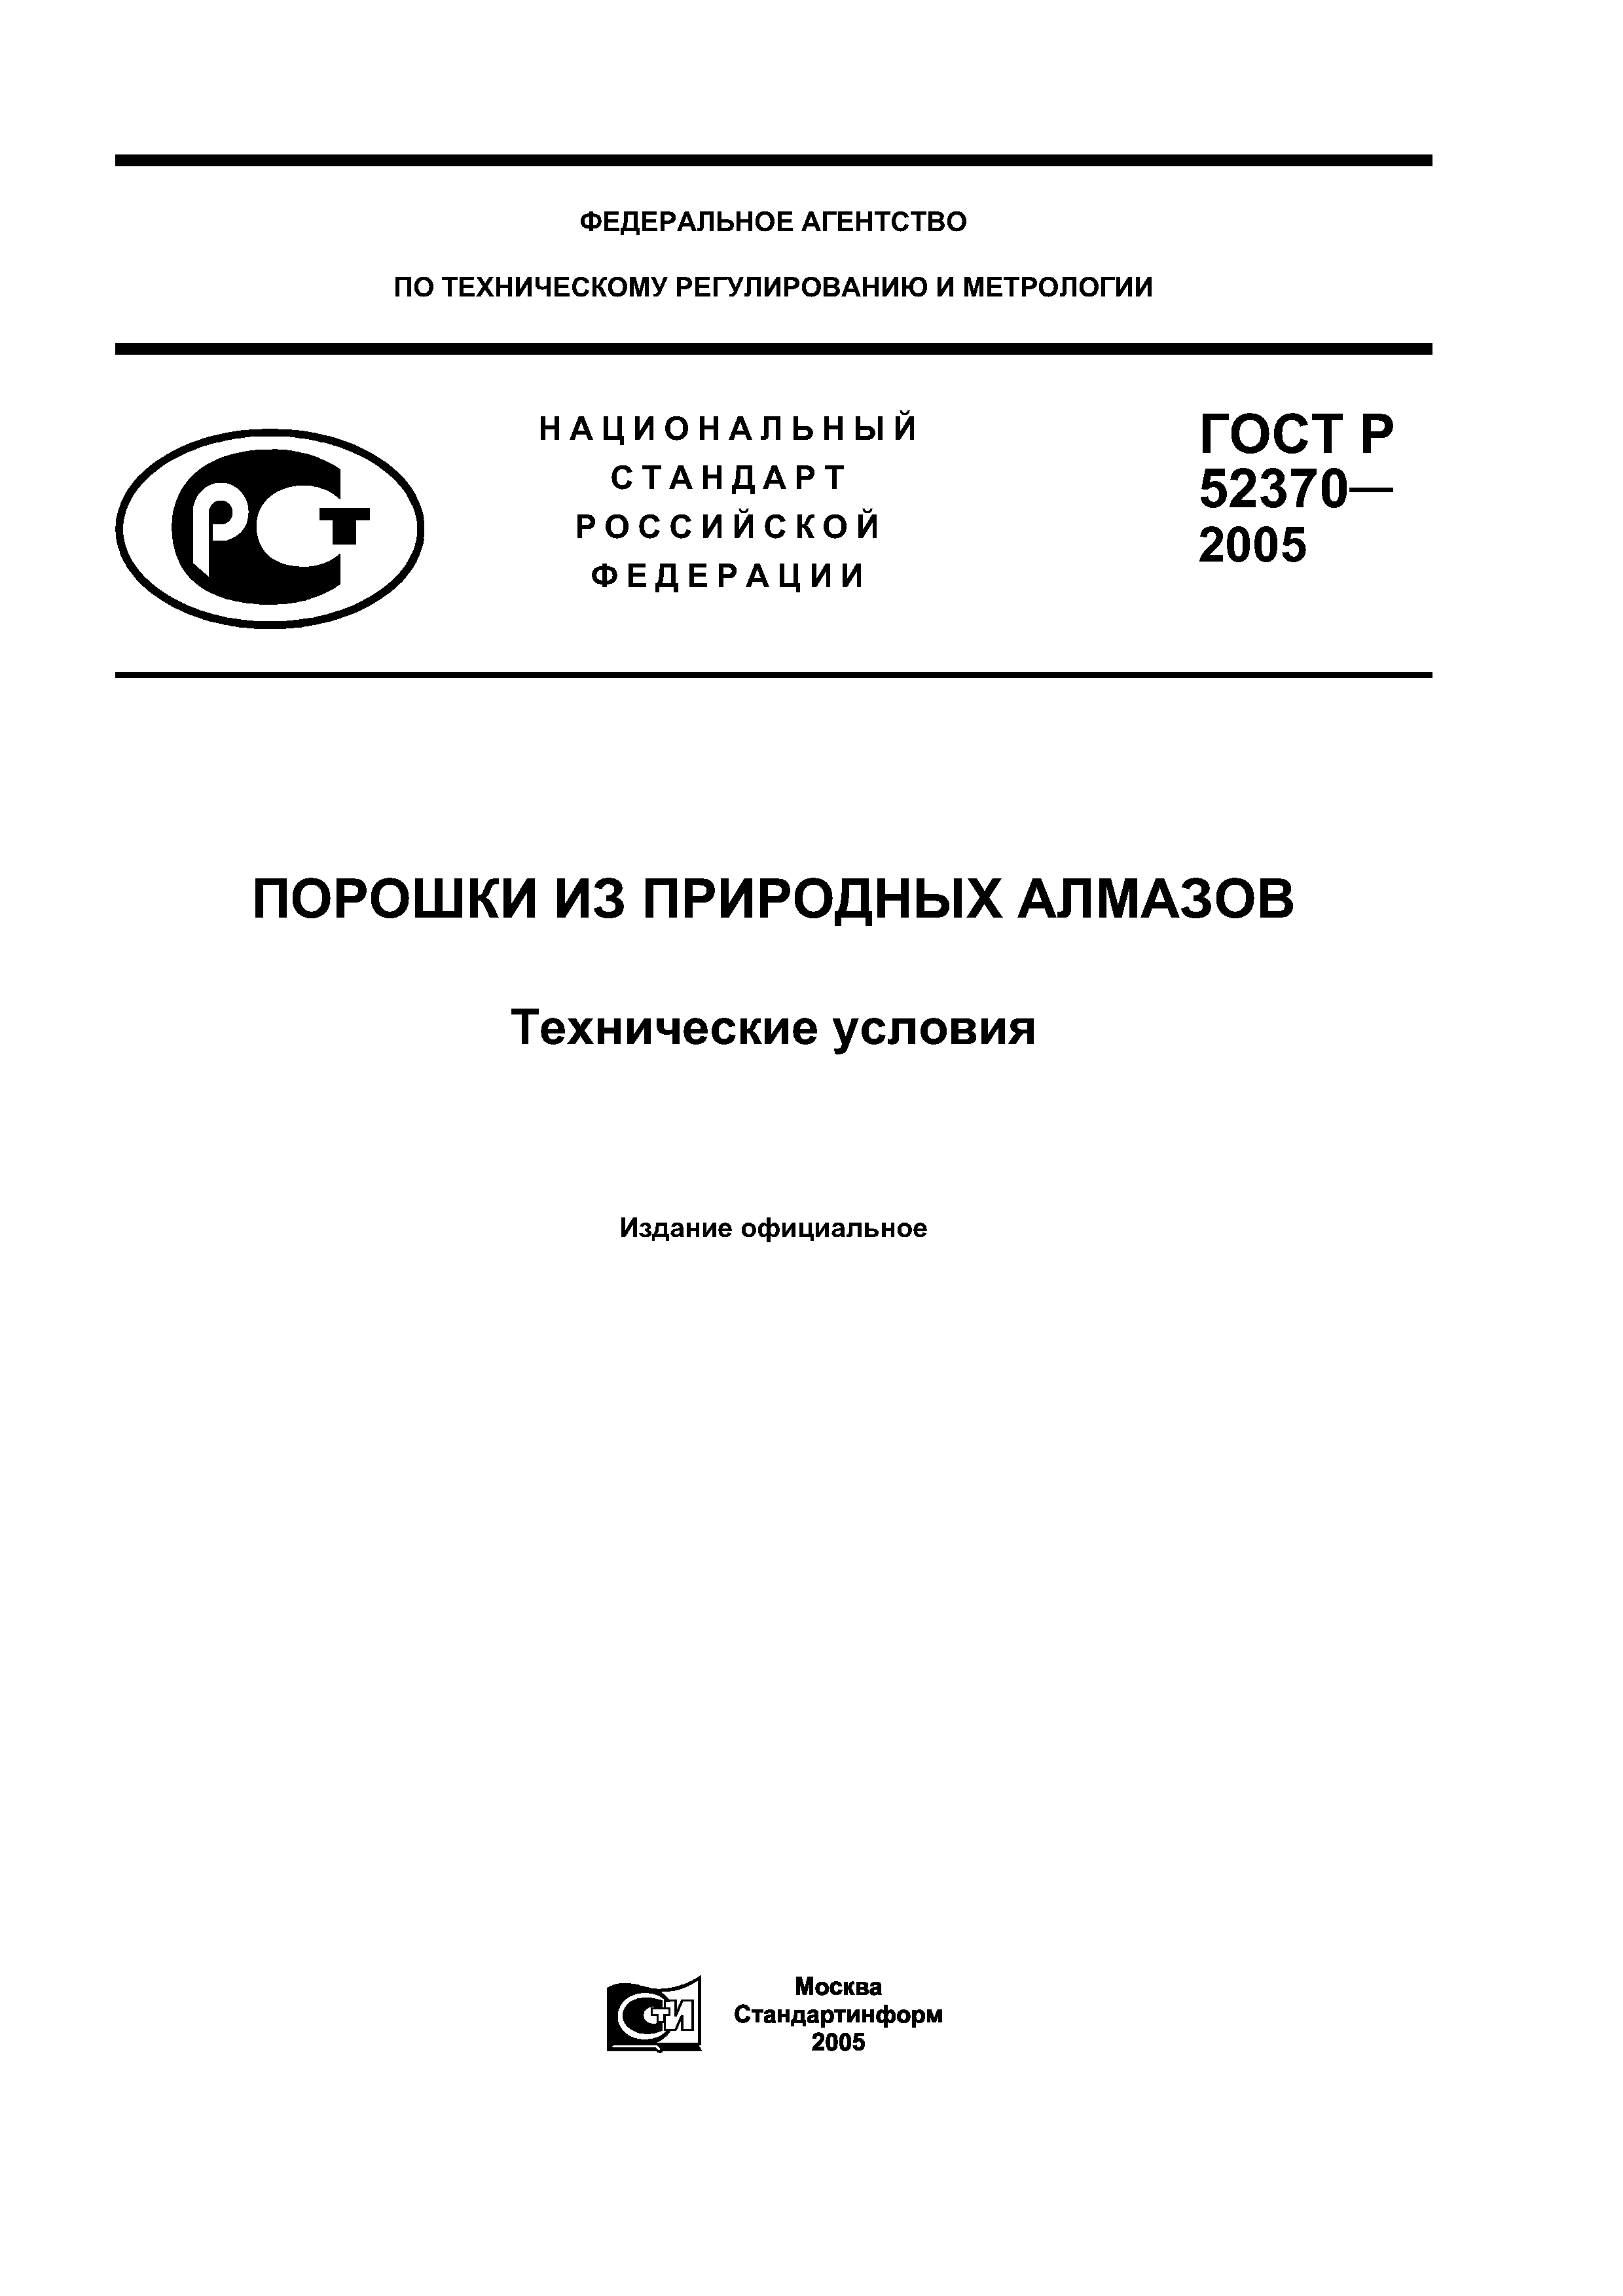 ГОСТ Р 52370-2005